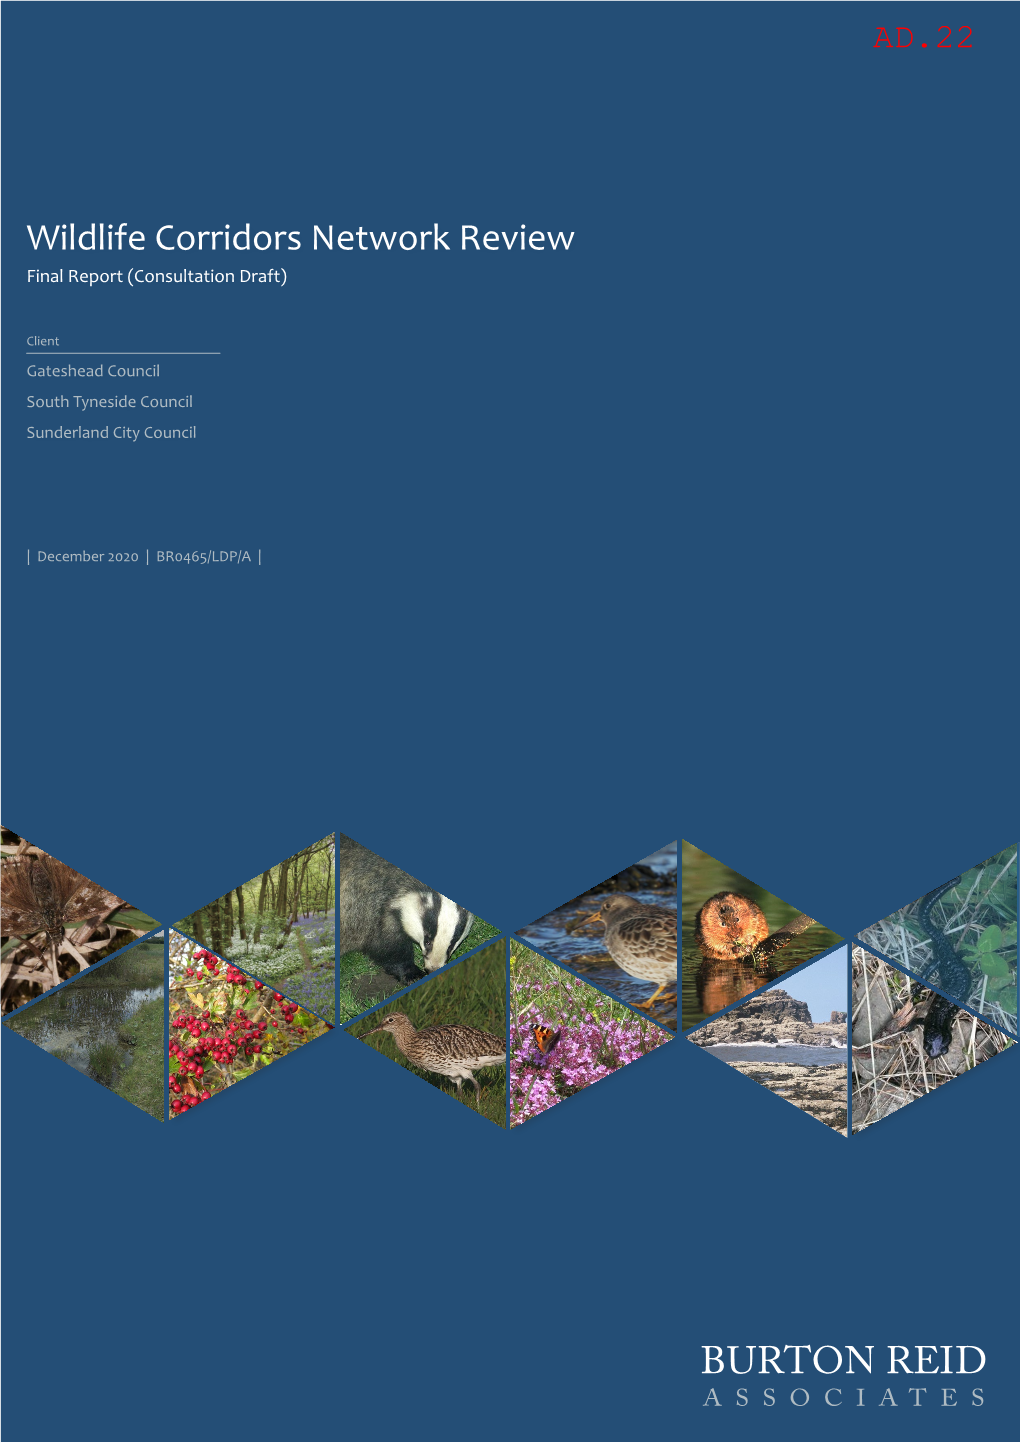 Wildlife Corridors Network Review BURTON REID